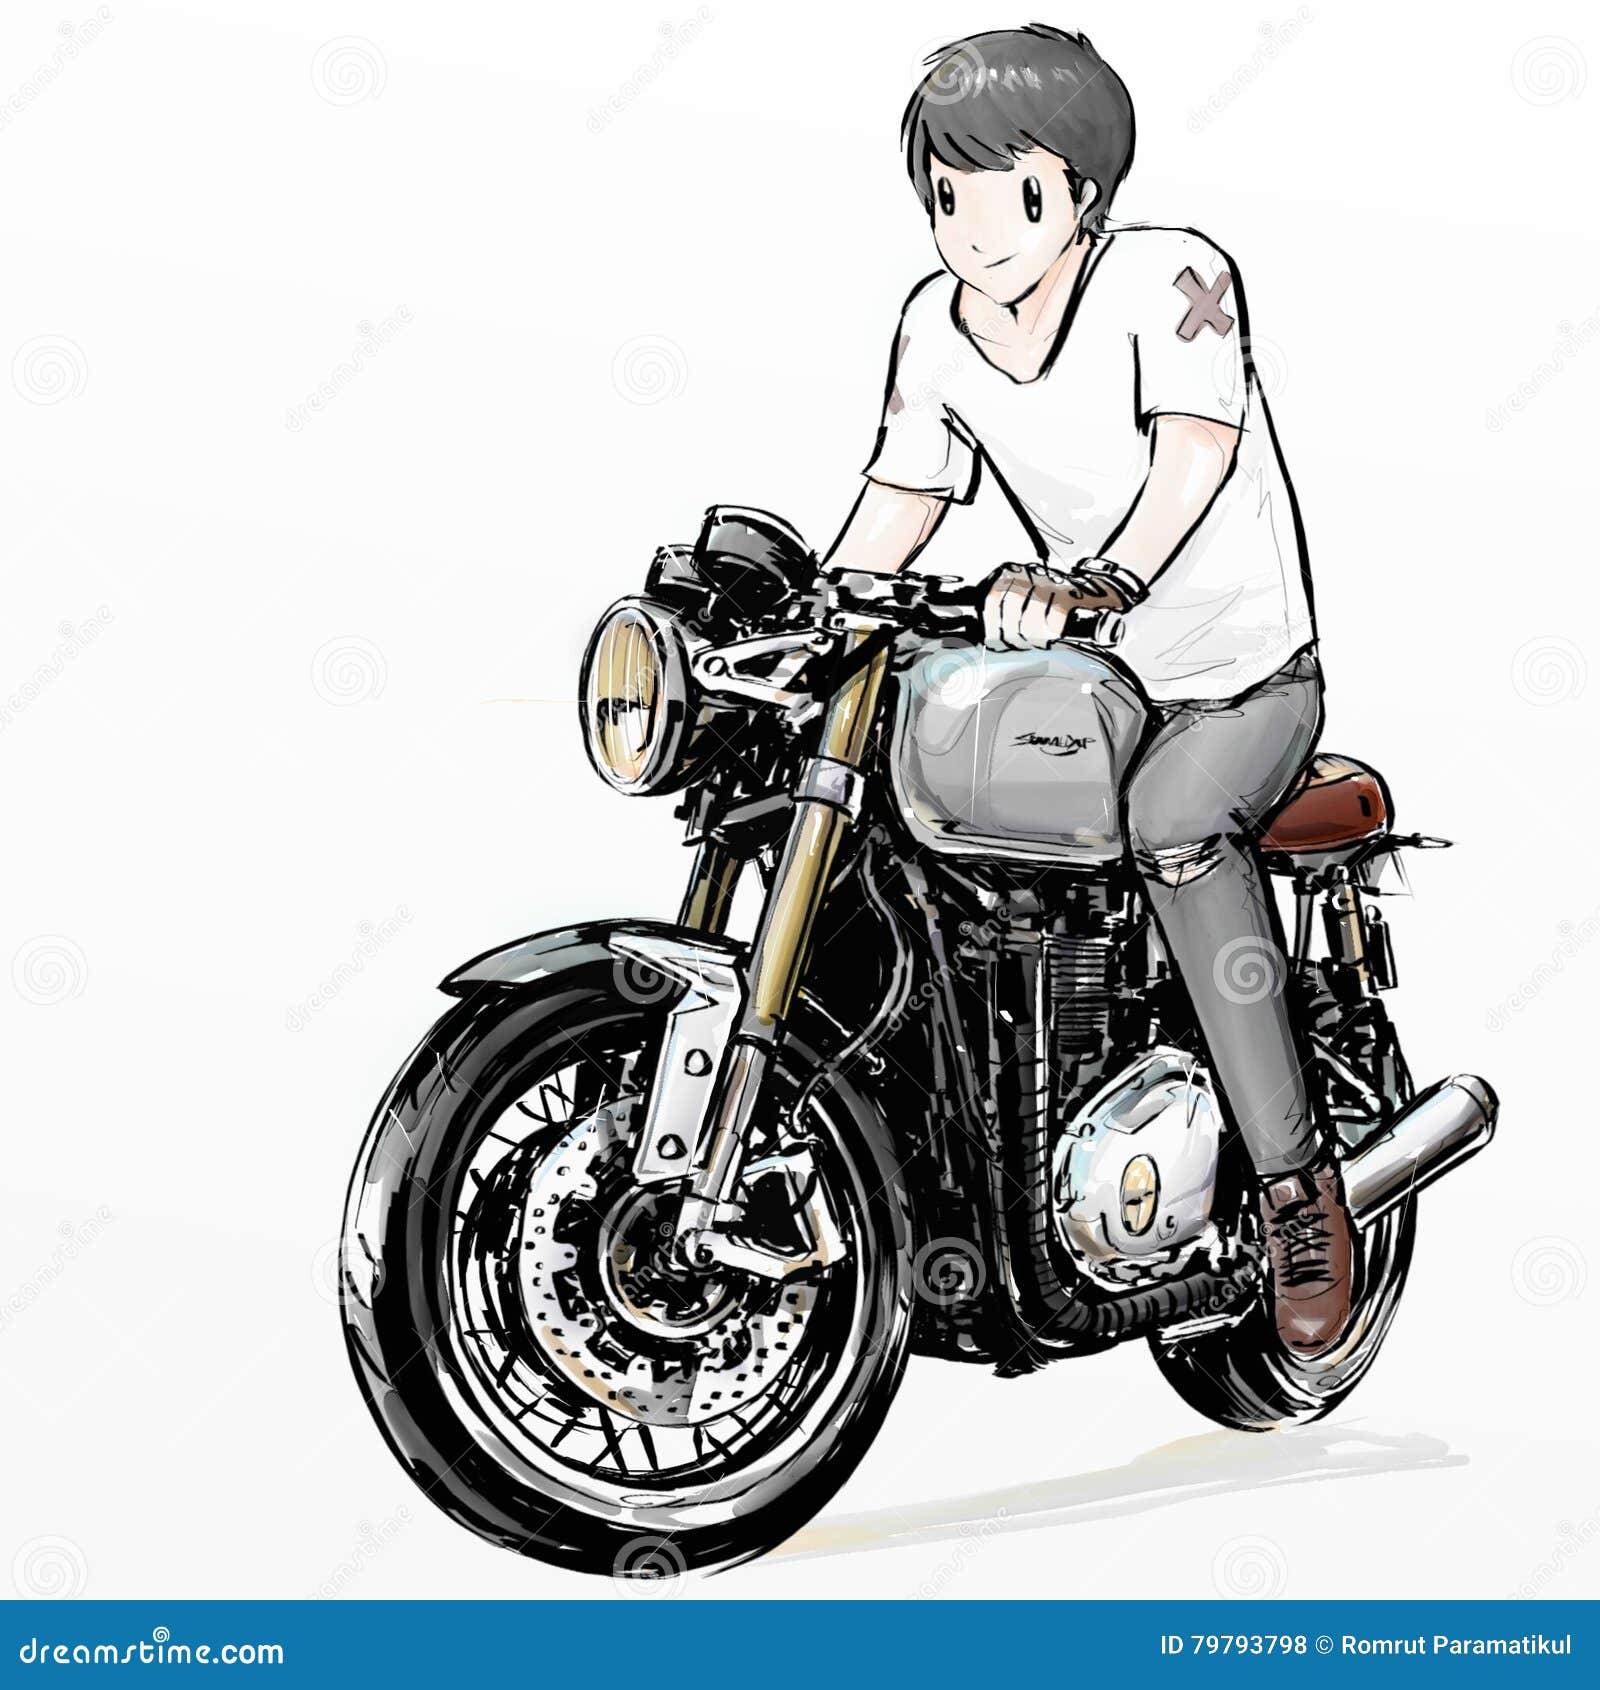 Cute Cartoon Boy Riding Motorcycle Stock Illustration Illustration Of Cool Biker